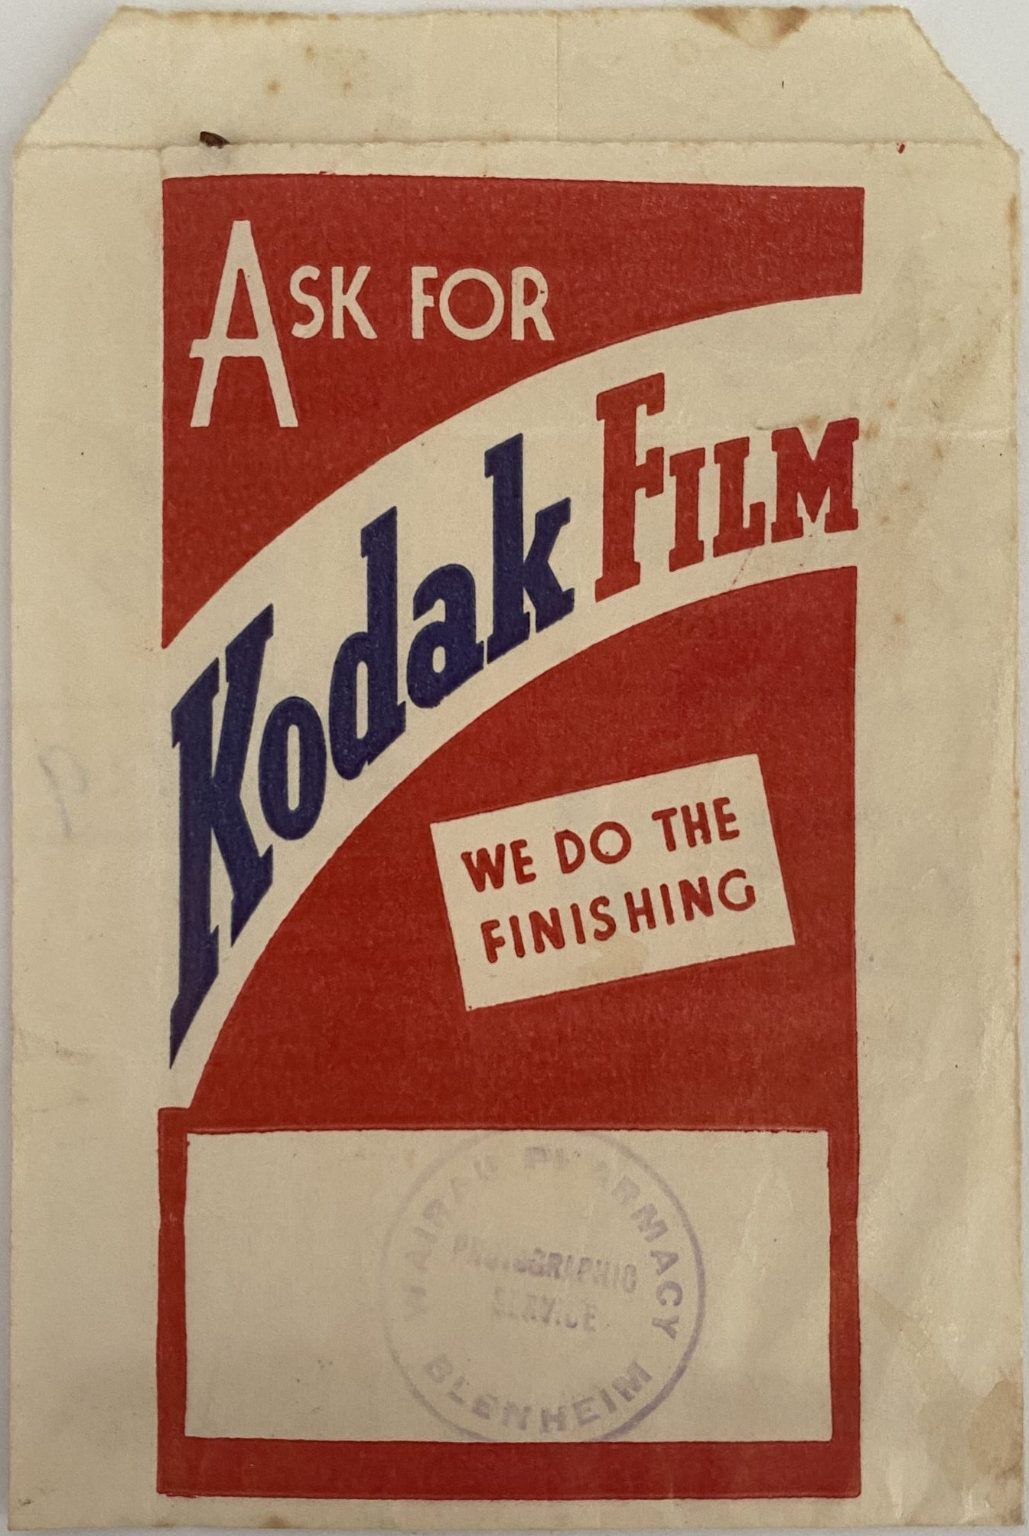 OLD PHOTO / NEGATIVE WALLET: Kodak Film 1940s